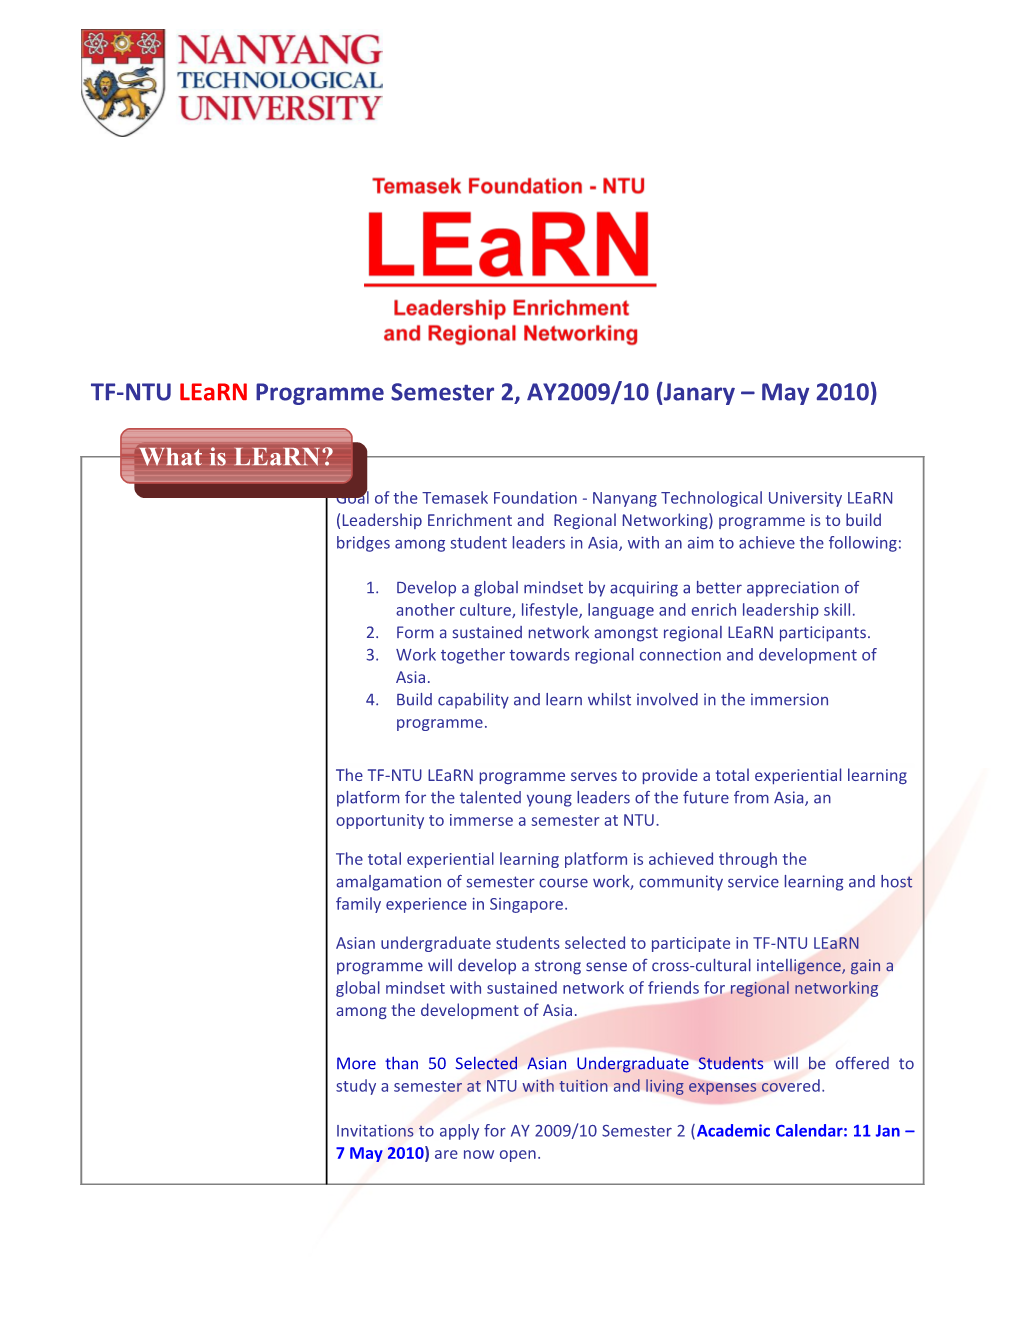 TF-NTU Learn Programme Semester 2, AY2009/10 (Janary May 2010)